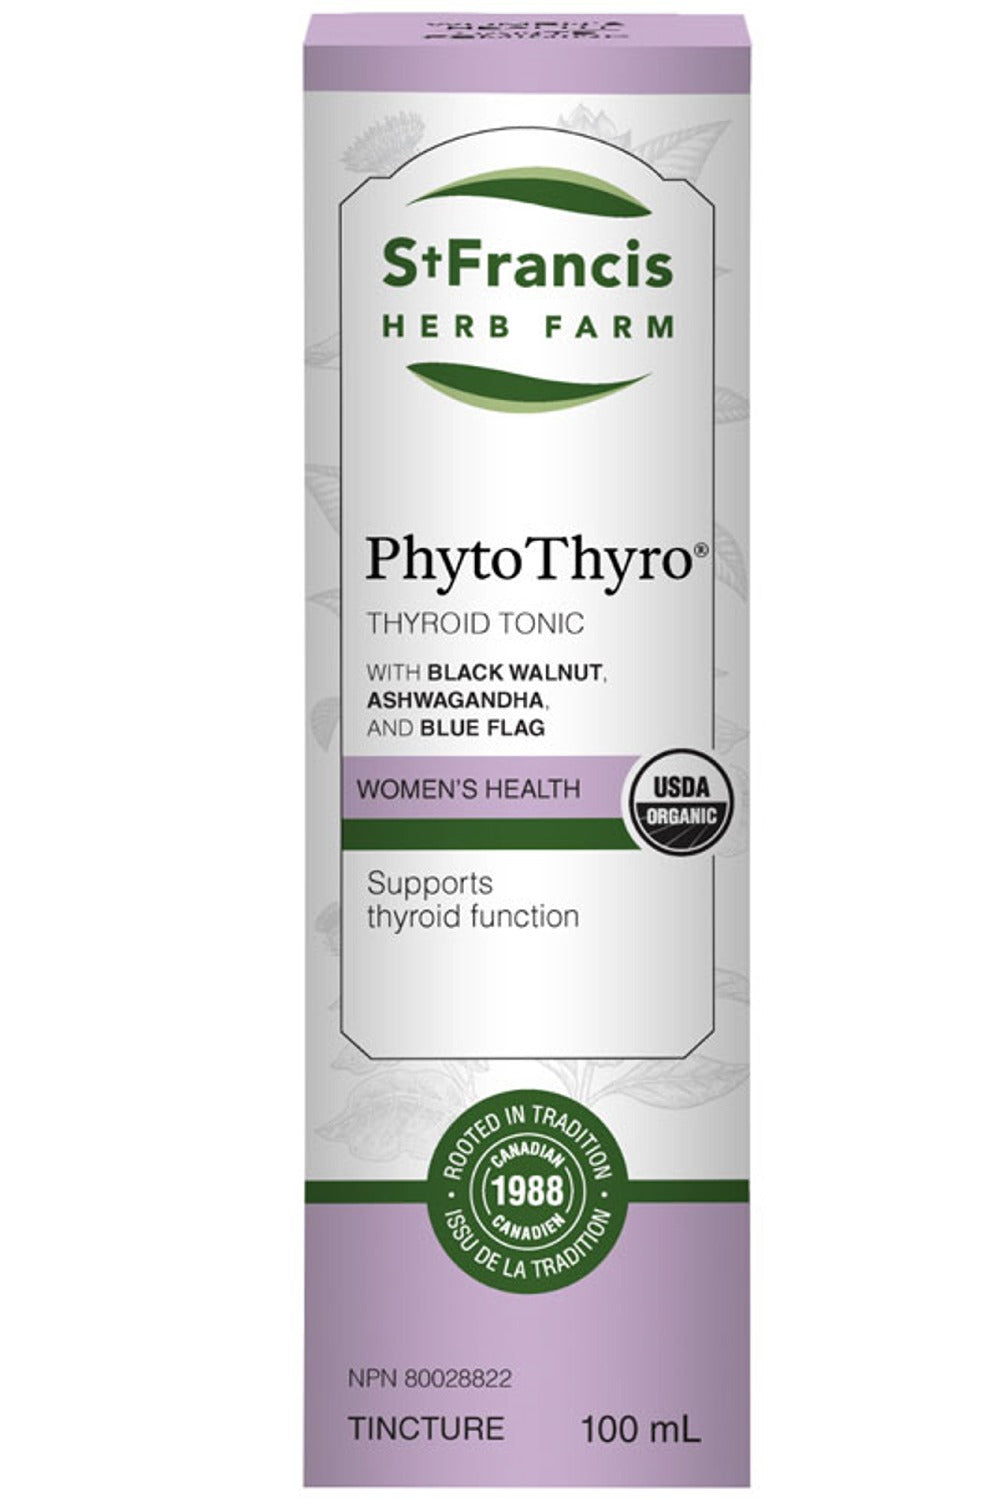 ST FRANCIS HERB FARM PhytoThyro (100 ml)